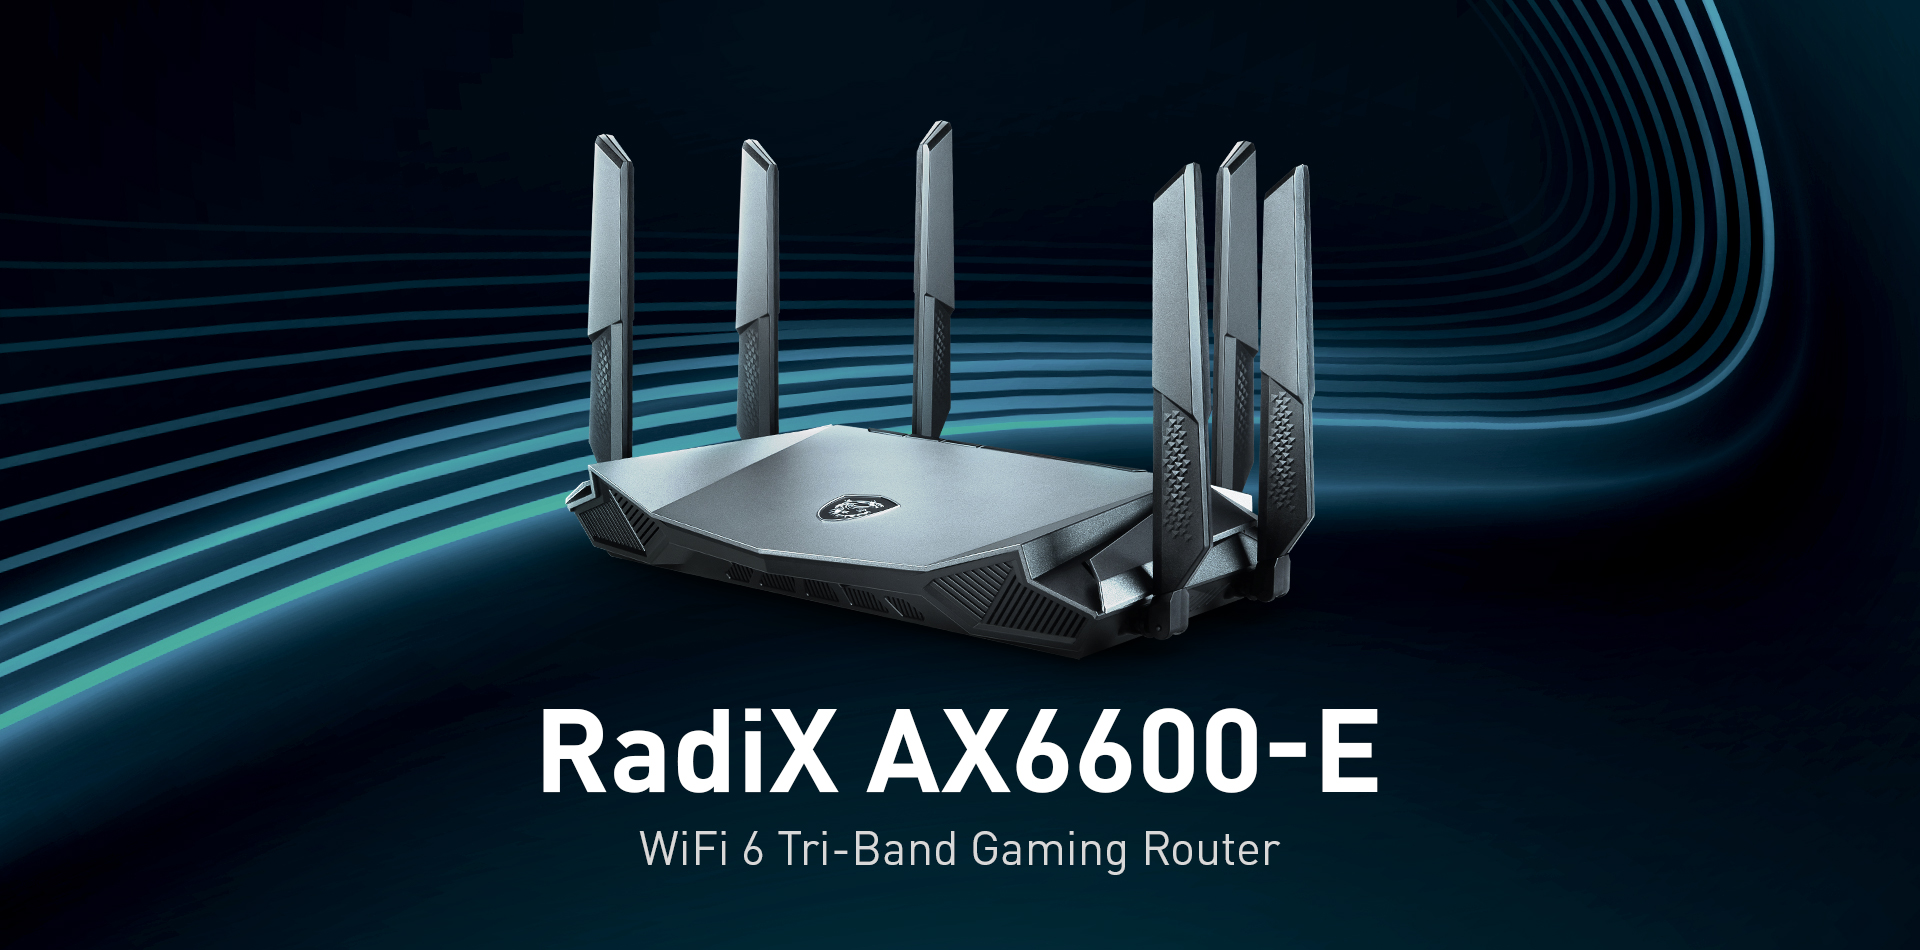 MSI RadiX AX6600 Routeur de jeu tri-bande Wi-Fi 6